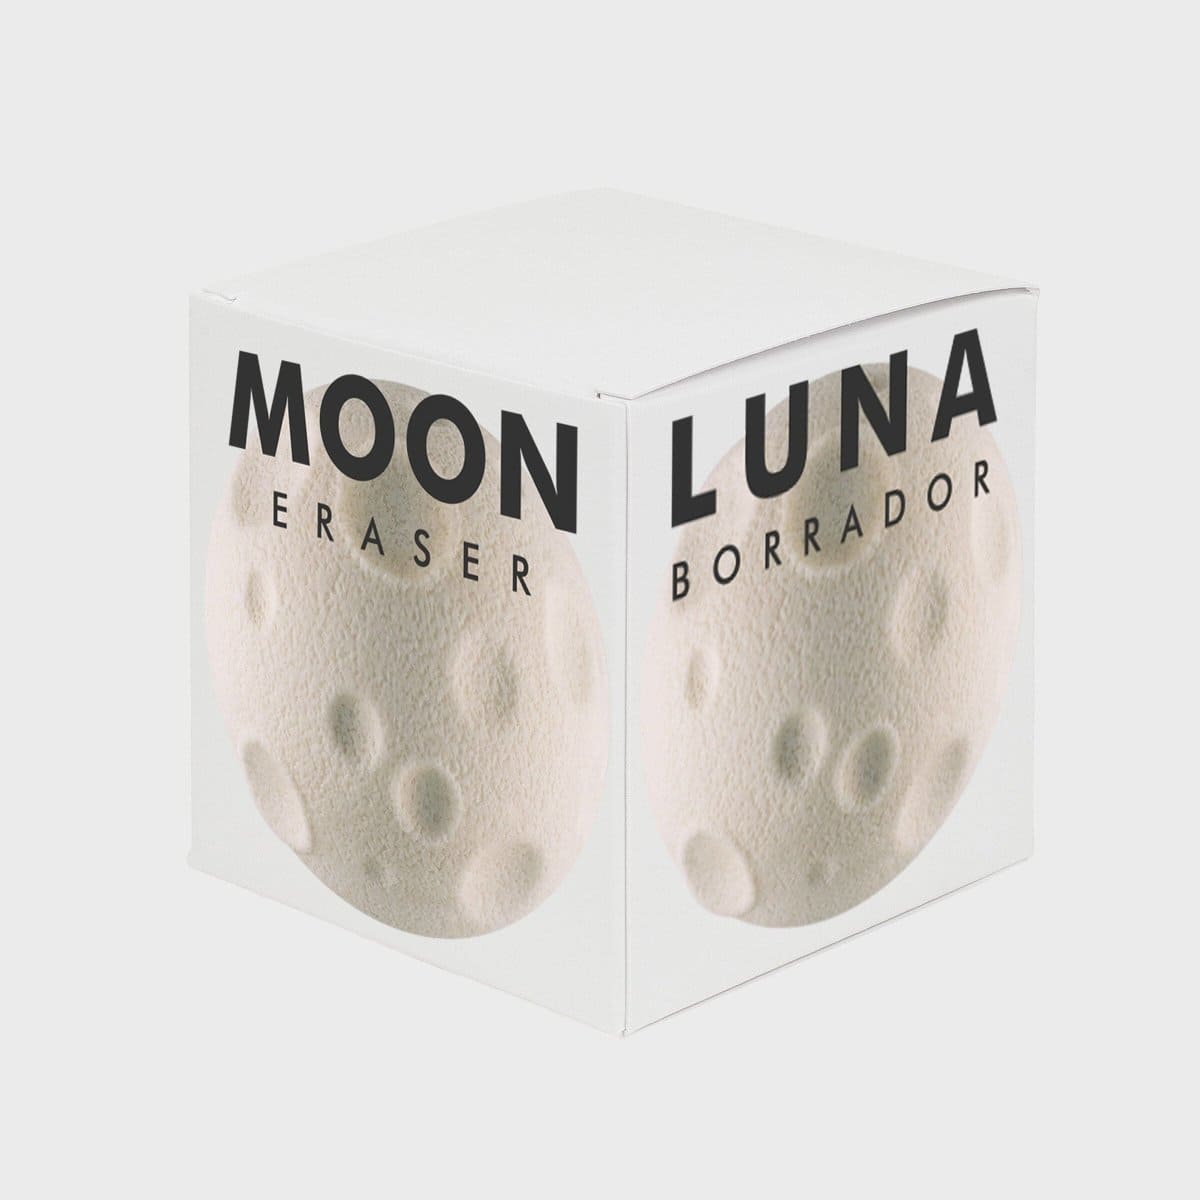 Giant celestial Lunar Rubber, Moon Eraser - Eraser by SuckUK